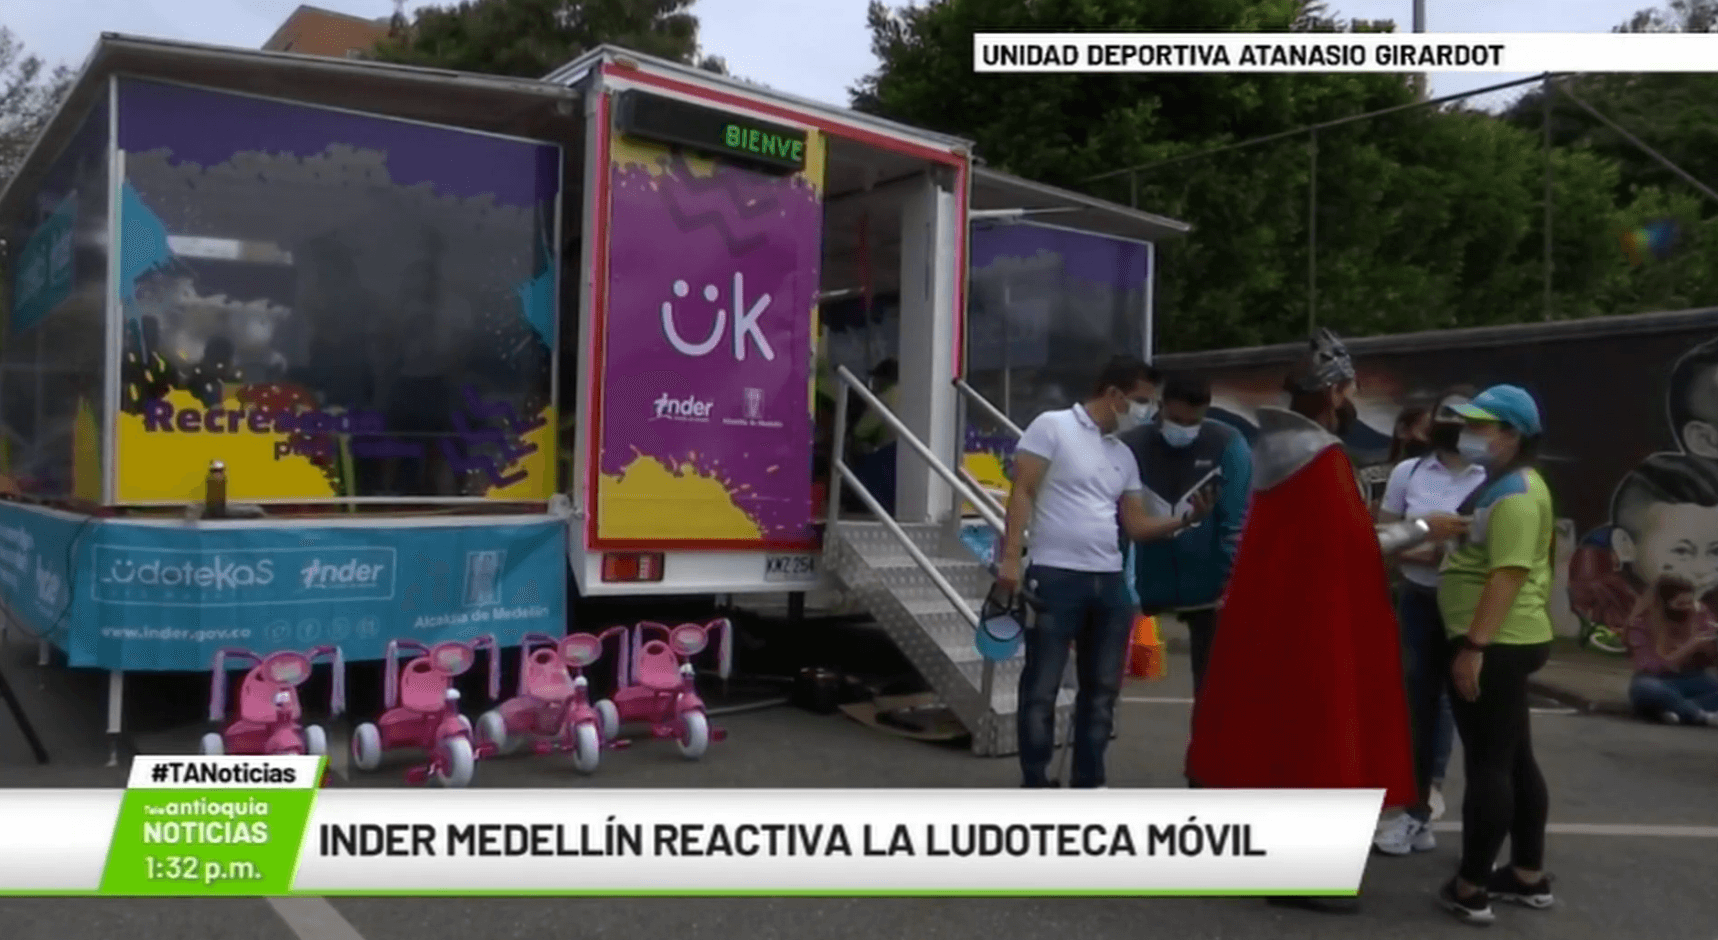 Inder Medellín reactiva la ludoteca móvil